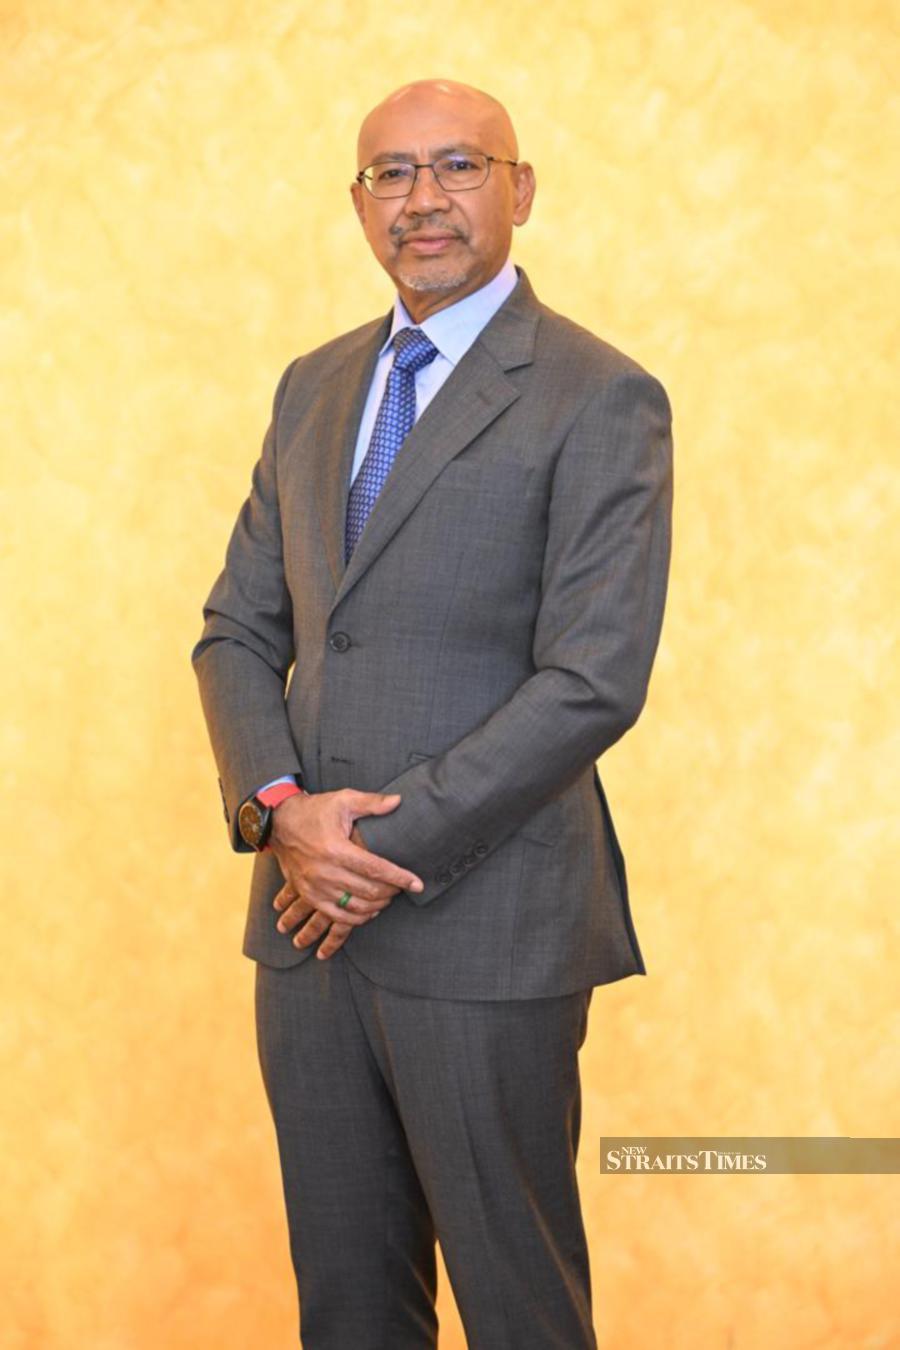 Golden Pharos chief executive officer Dr Mohd Zaki Hamzah